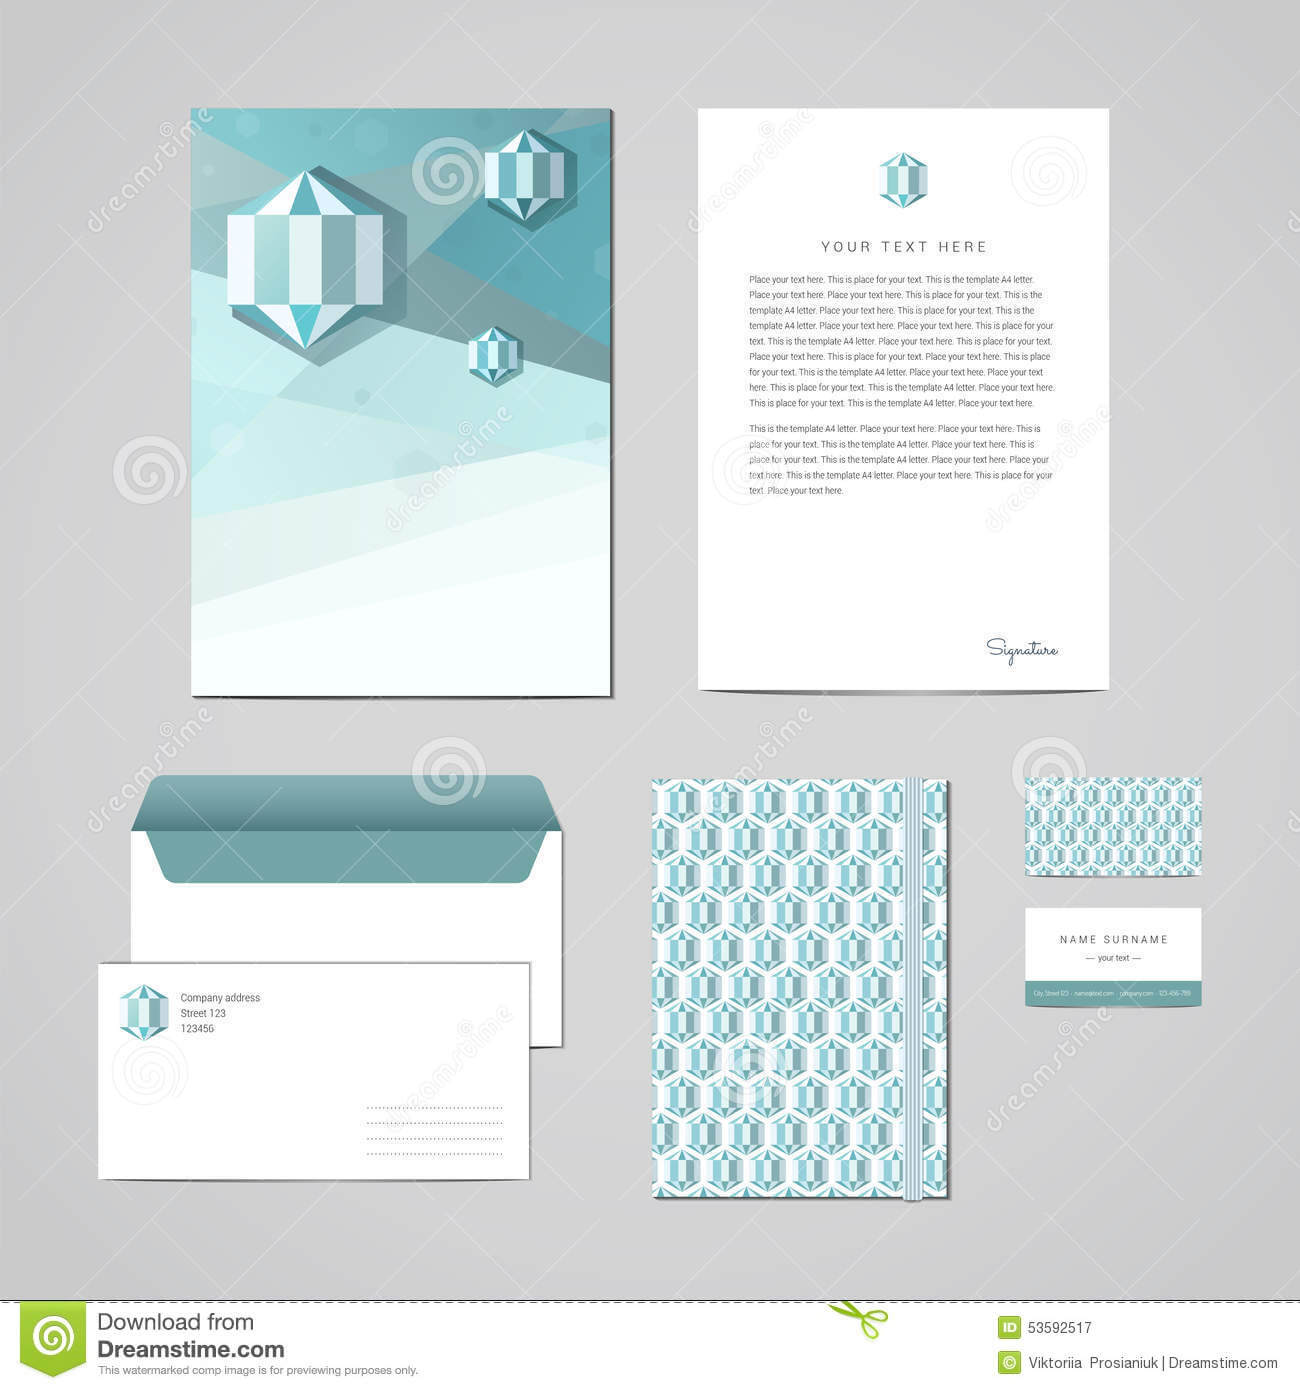 Corporate Identity Design Template. Documentation For Inside Business Card Letterhead Envelope Template